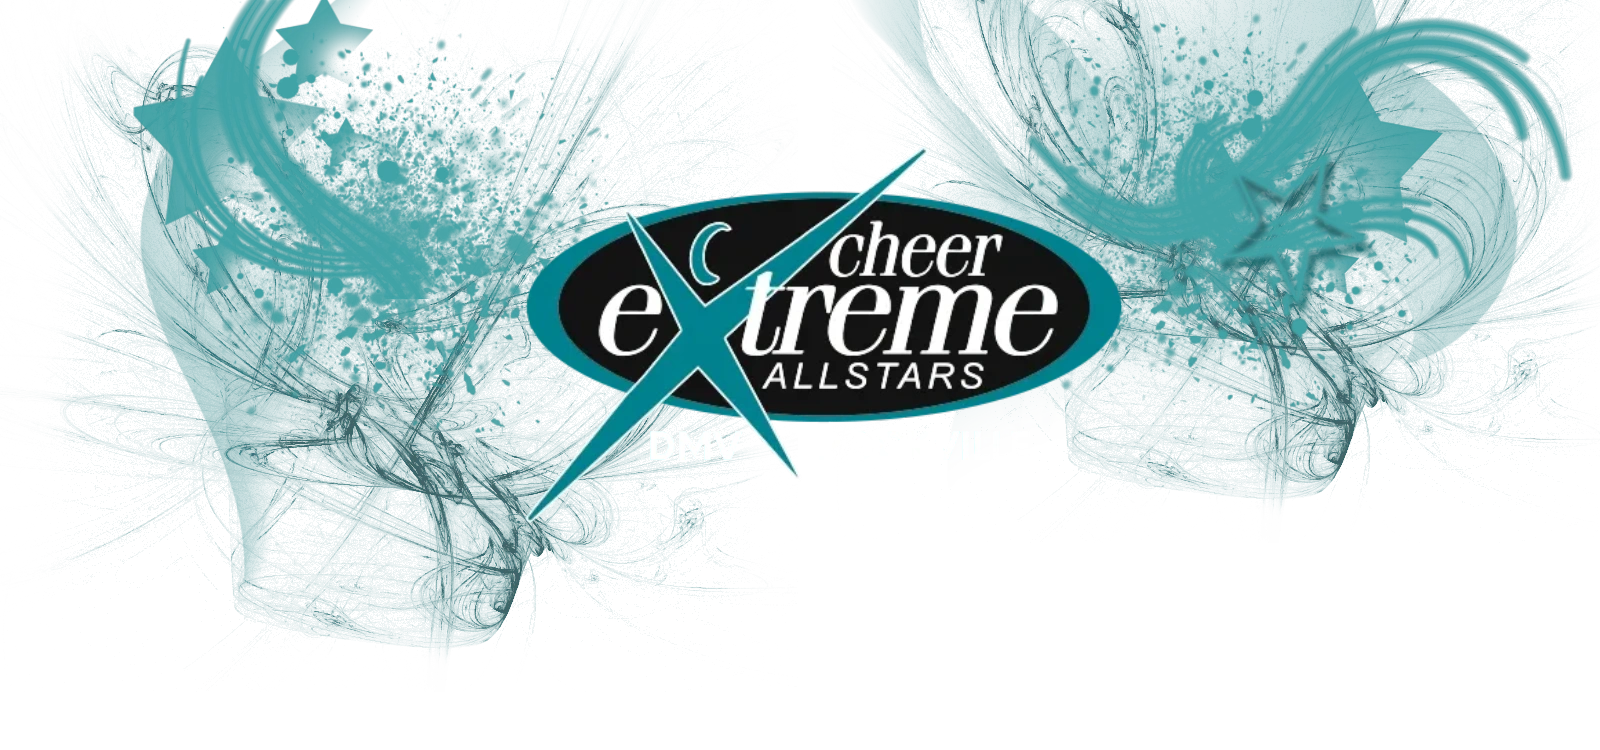 cheer extreme logo